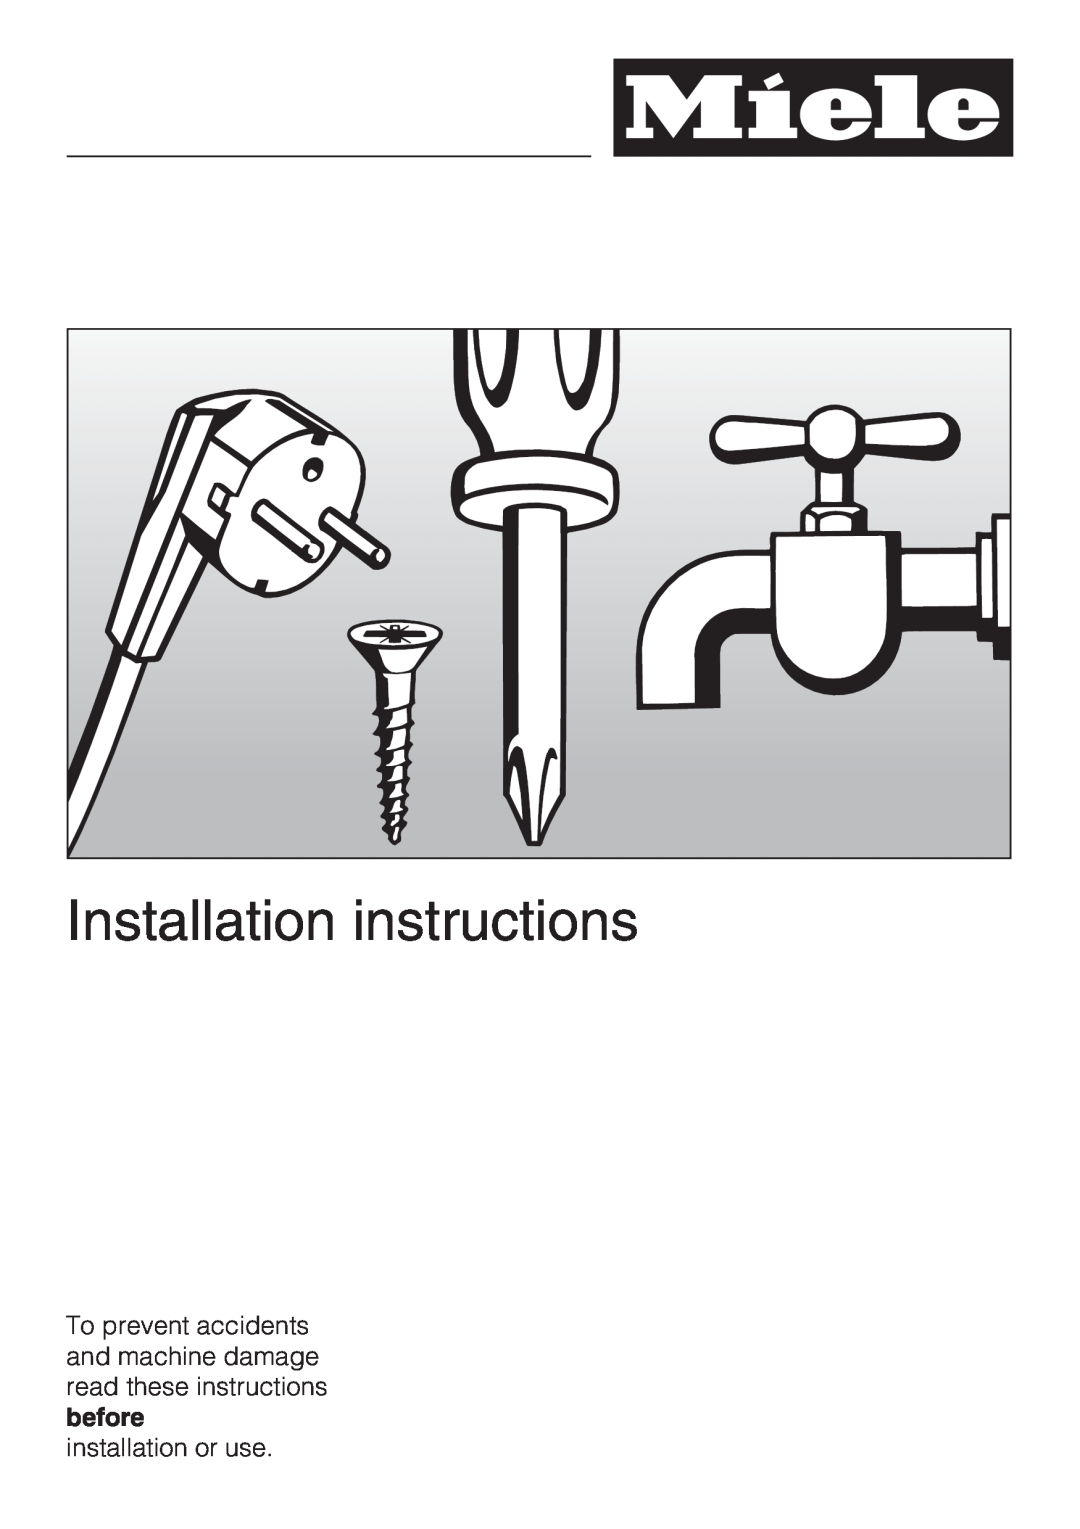 Miele KFN 9753 ID installation instructions Installation instructions, installation or use 